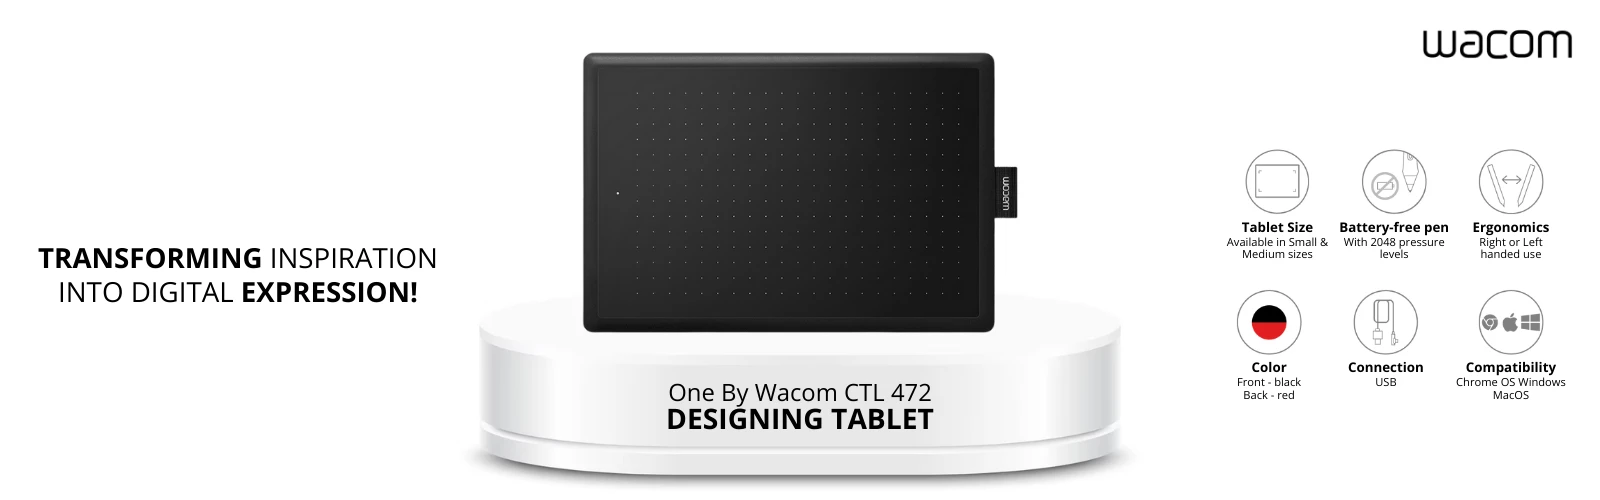 Wacom Wacom Tablet Design